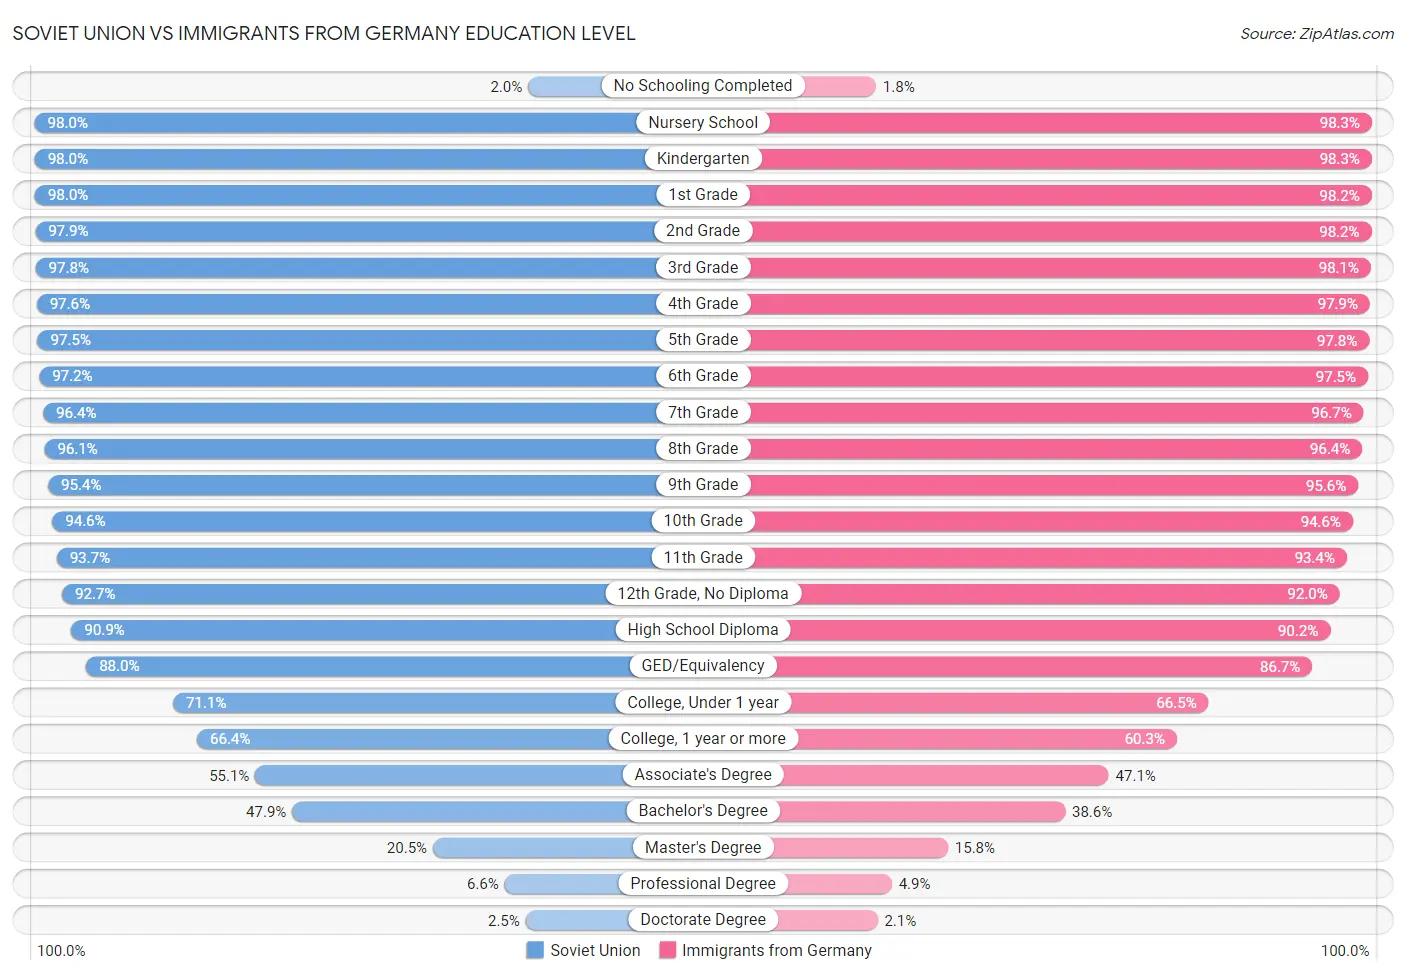 Soviet Union vs Immigrants from Germany Education Level